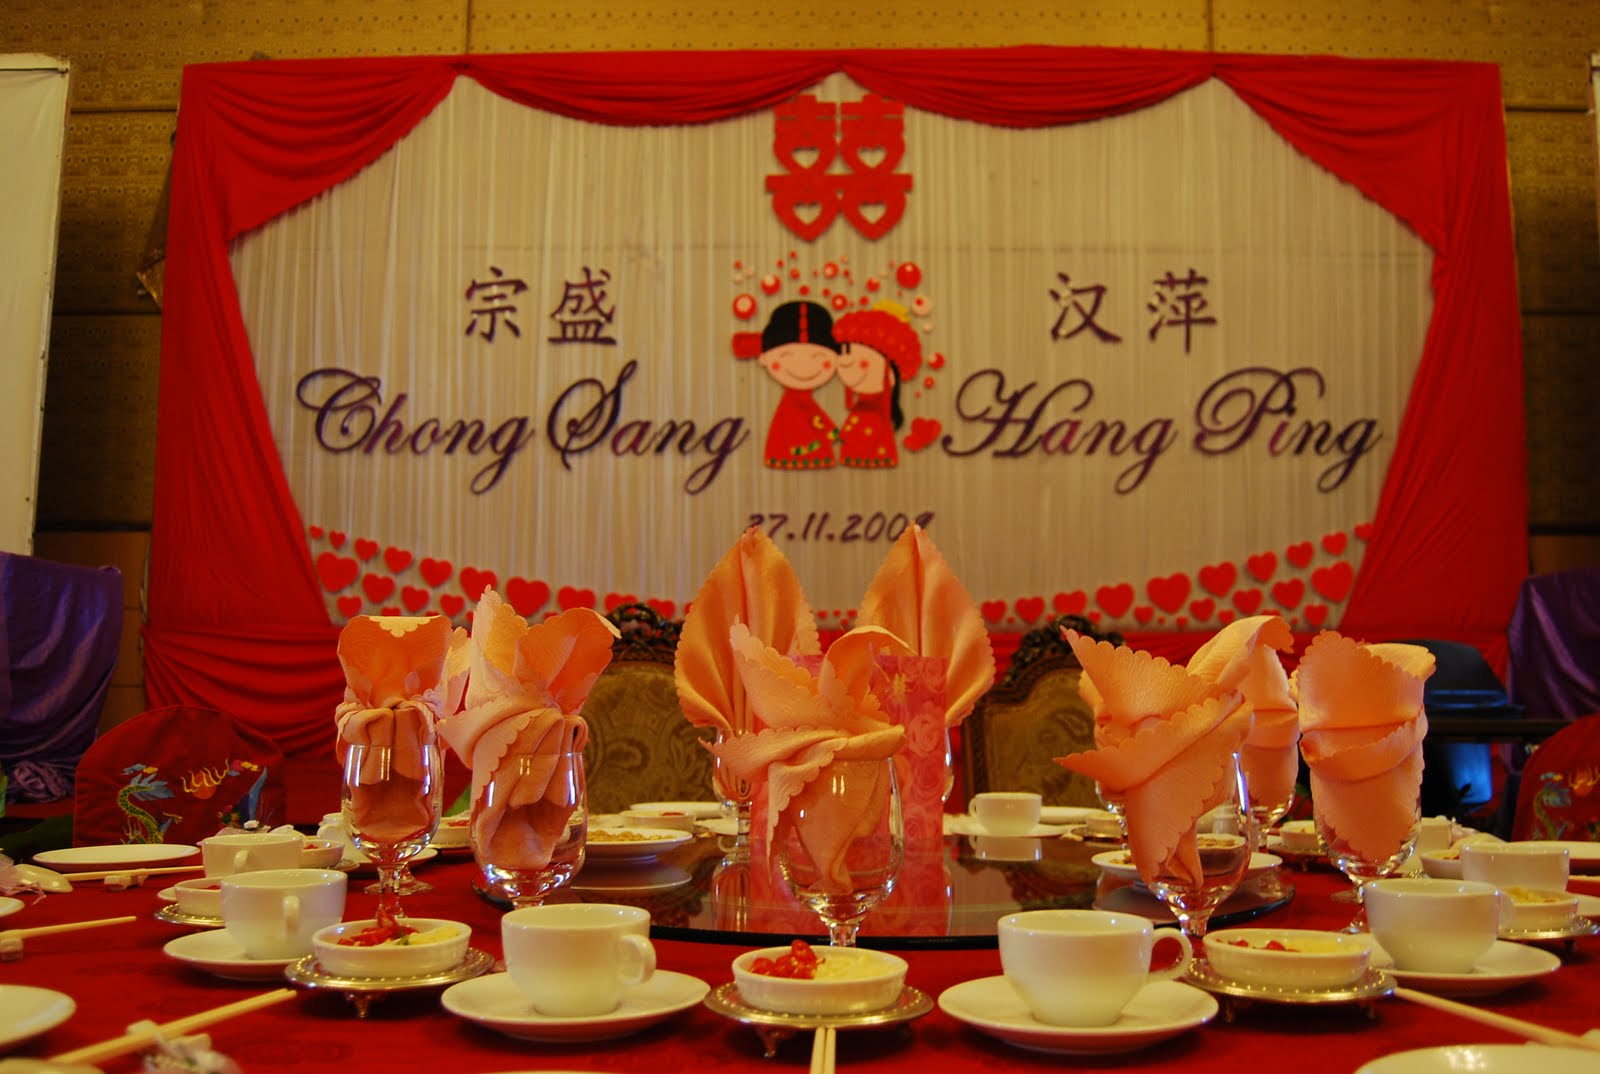 Wedding backdrop for Chong